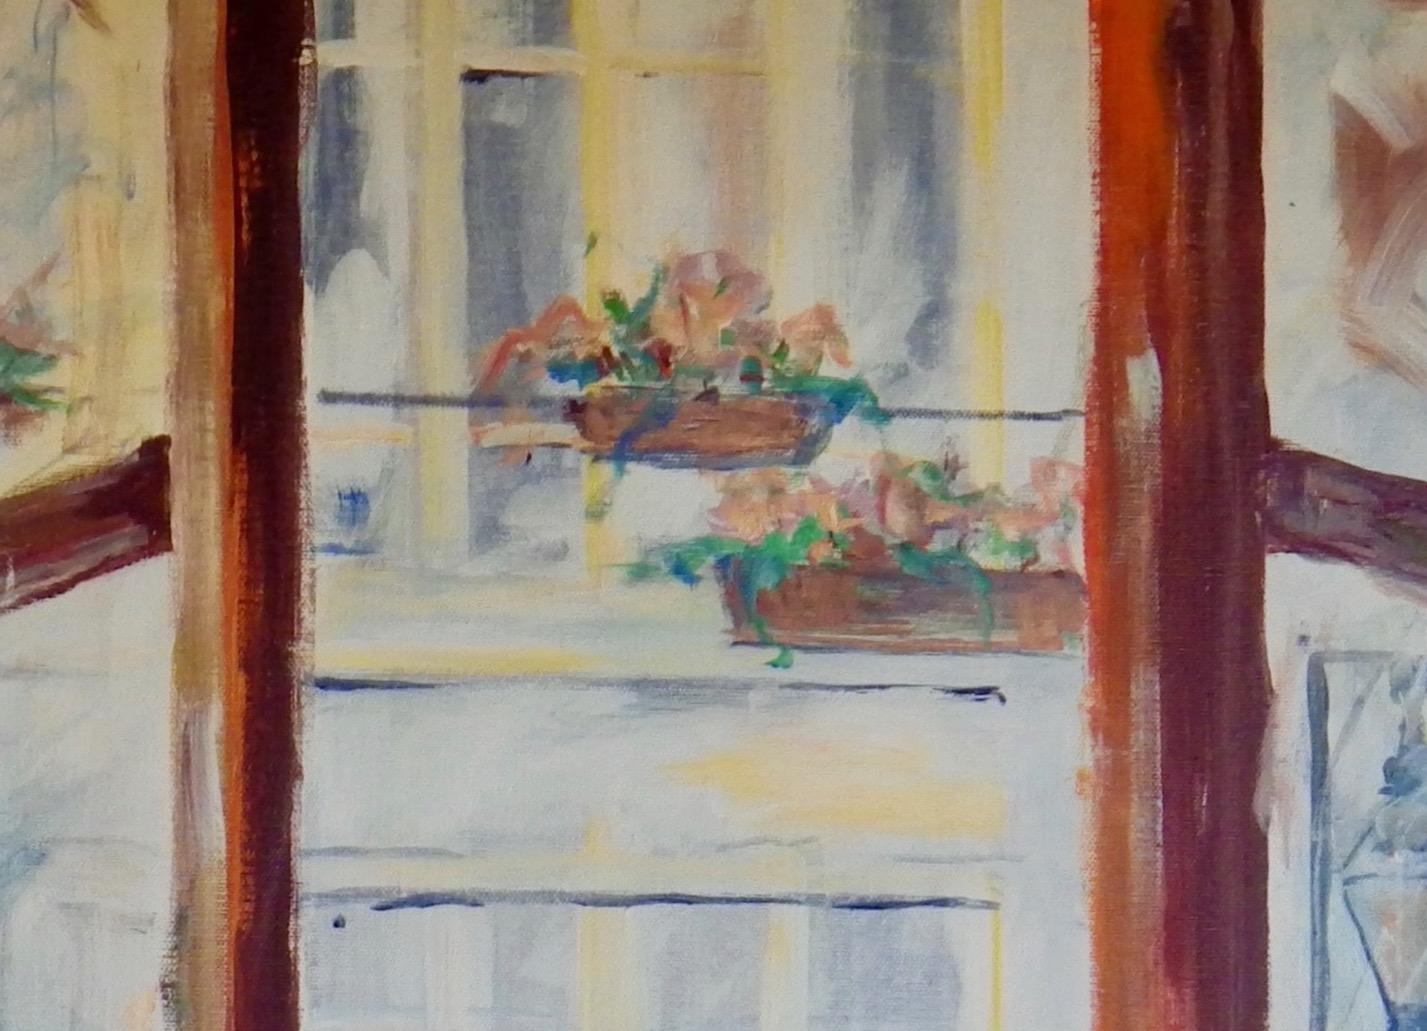 Afternoon Repose, Original Contemporary Impressionist Still Life Interior Painting, 2018
36